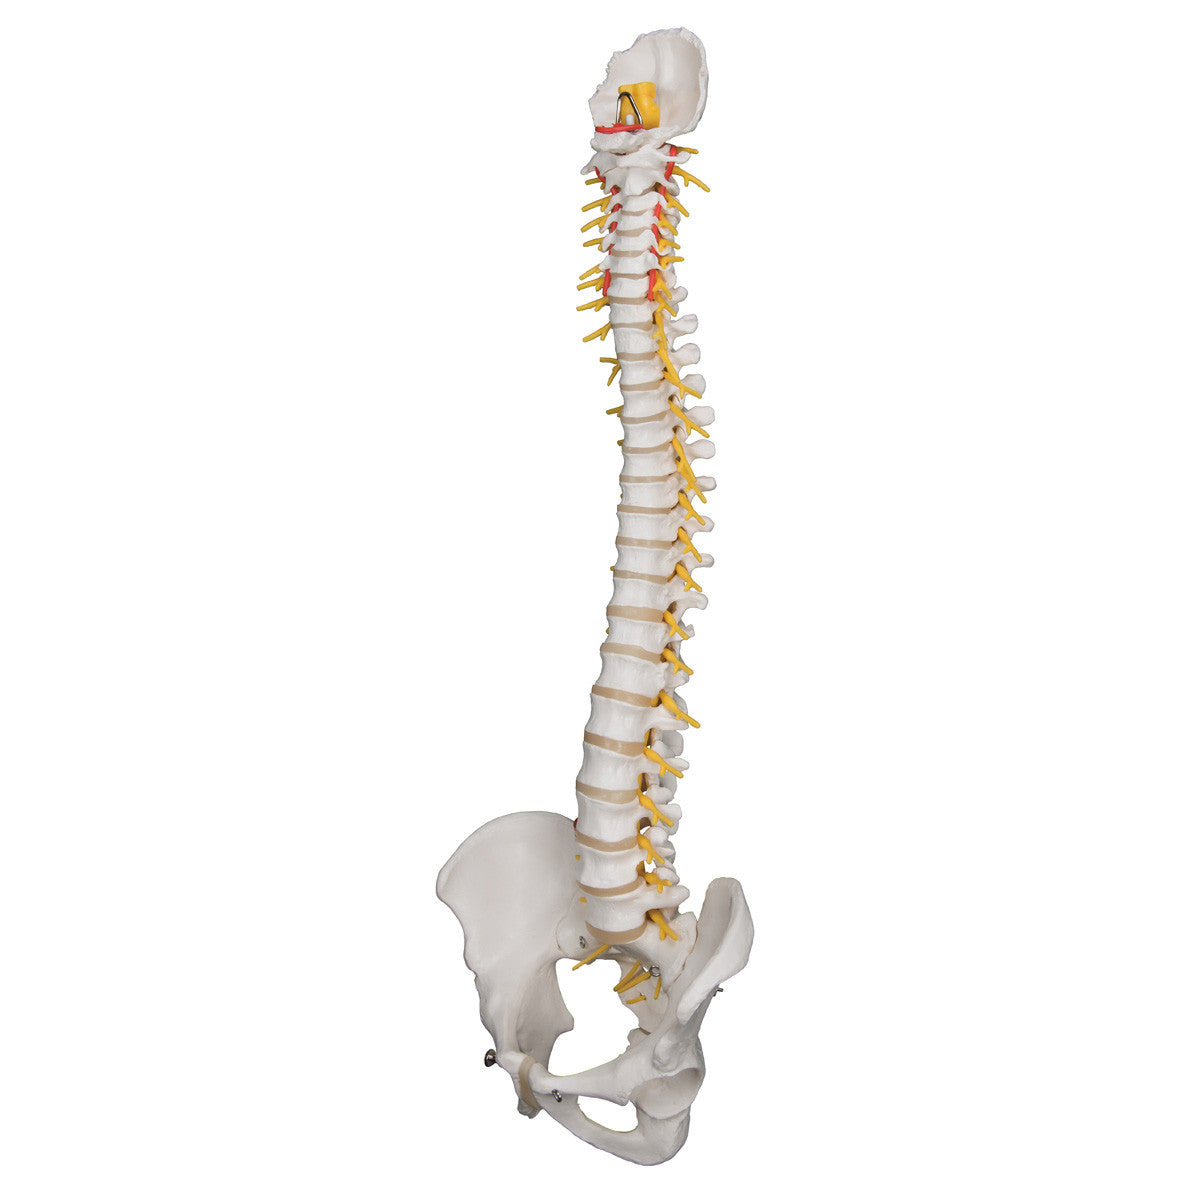 a58-5_03_1200_1200_deluxe-flexible-human-spine-model-3b-smart-anatomy__50570.1589753190.1280.1280.jpg